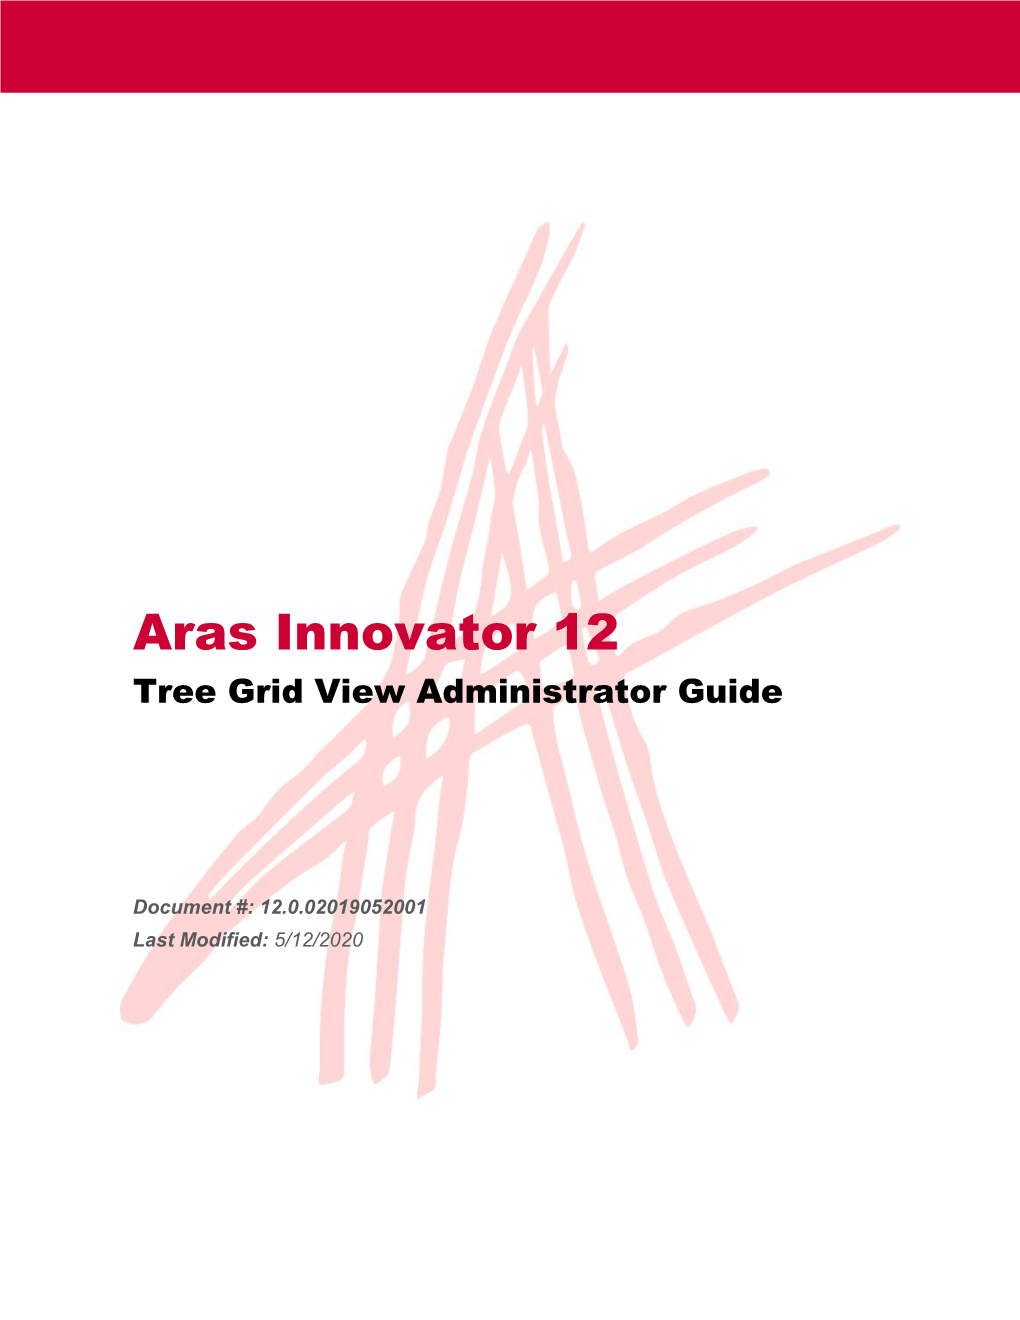 Aras Innovator 12 Tree Grid View Administrator Guide